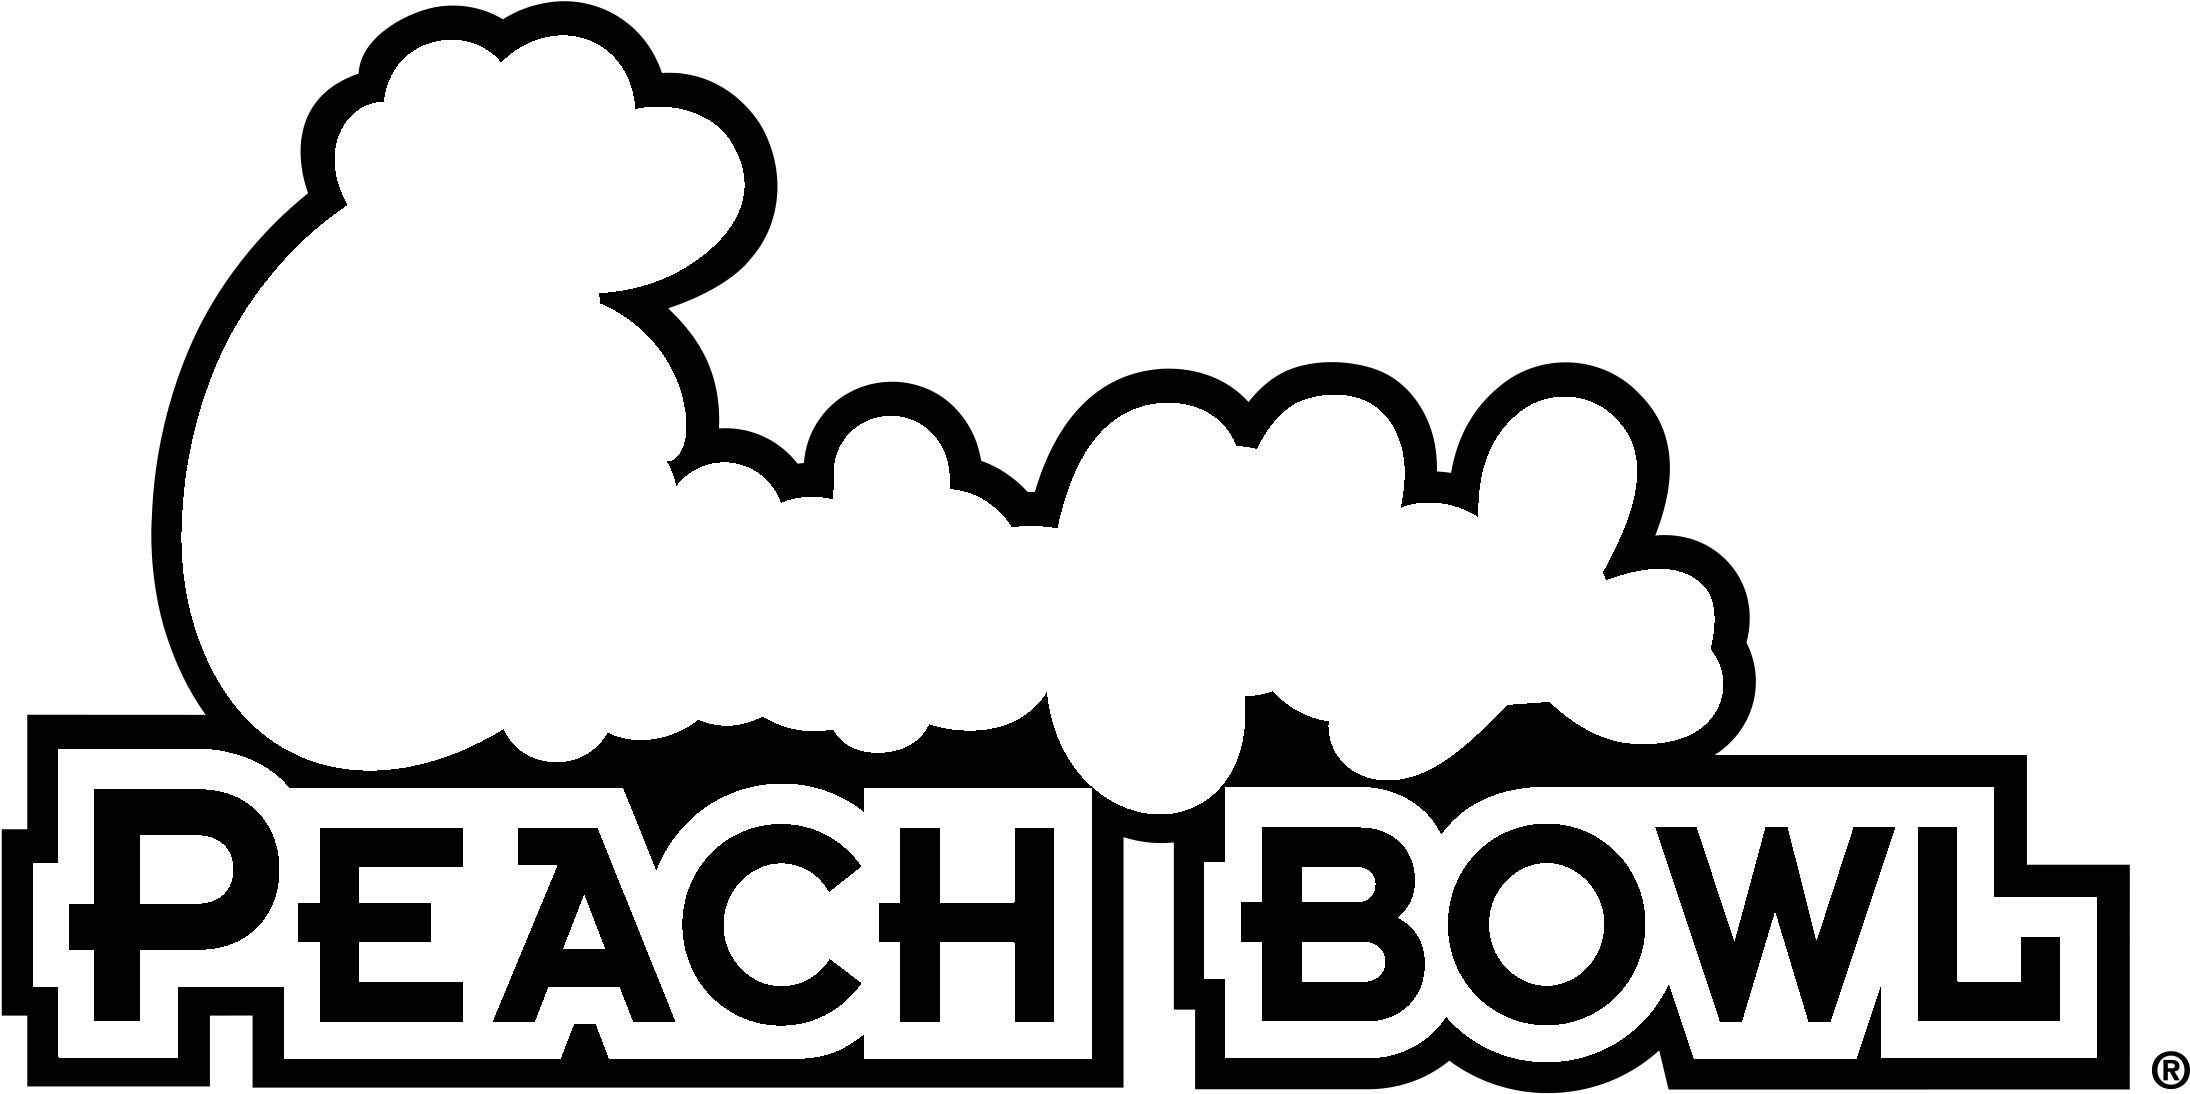 Chick Fil A Peach Bowl Logo Black And White - Chick Fil A Peach Bowl 2000 (2400x2400), Png Download